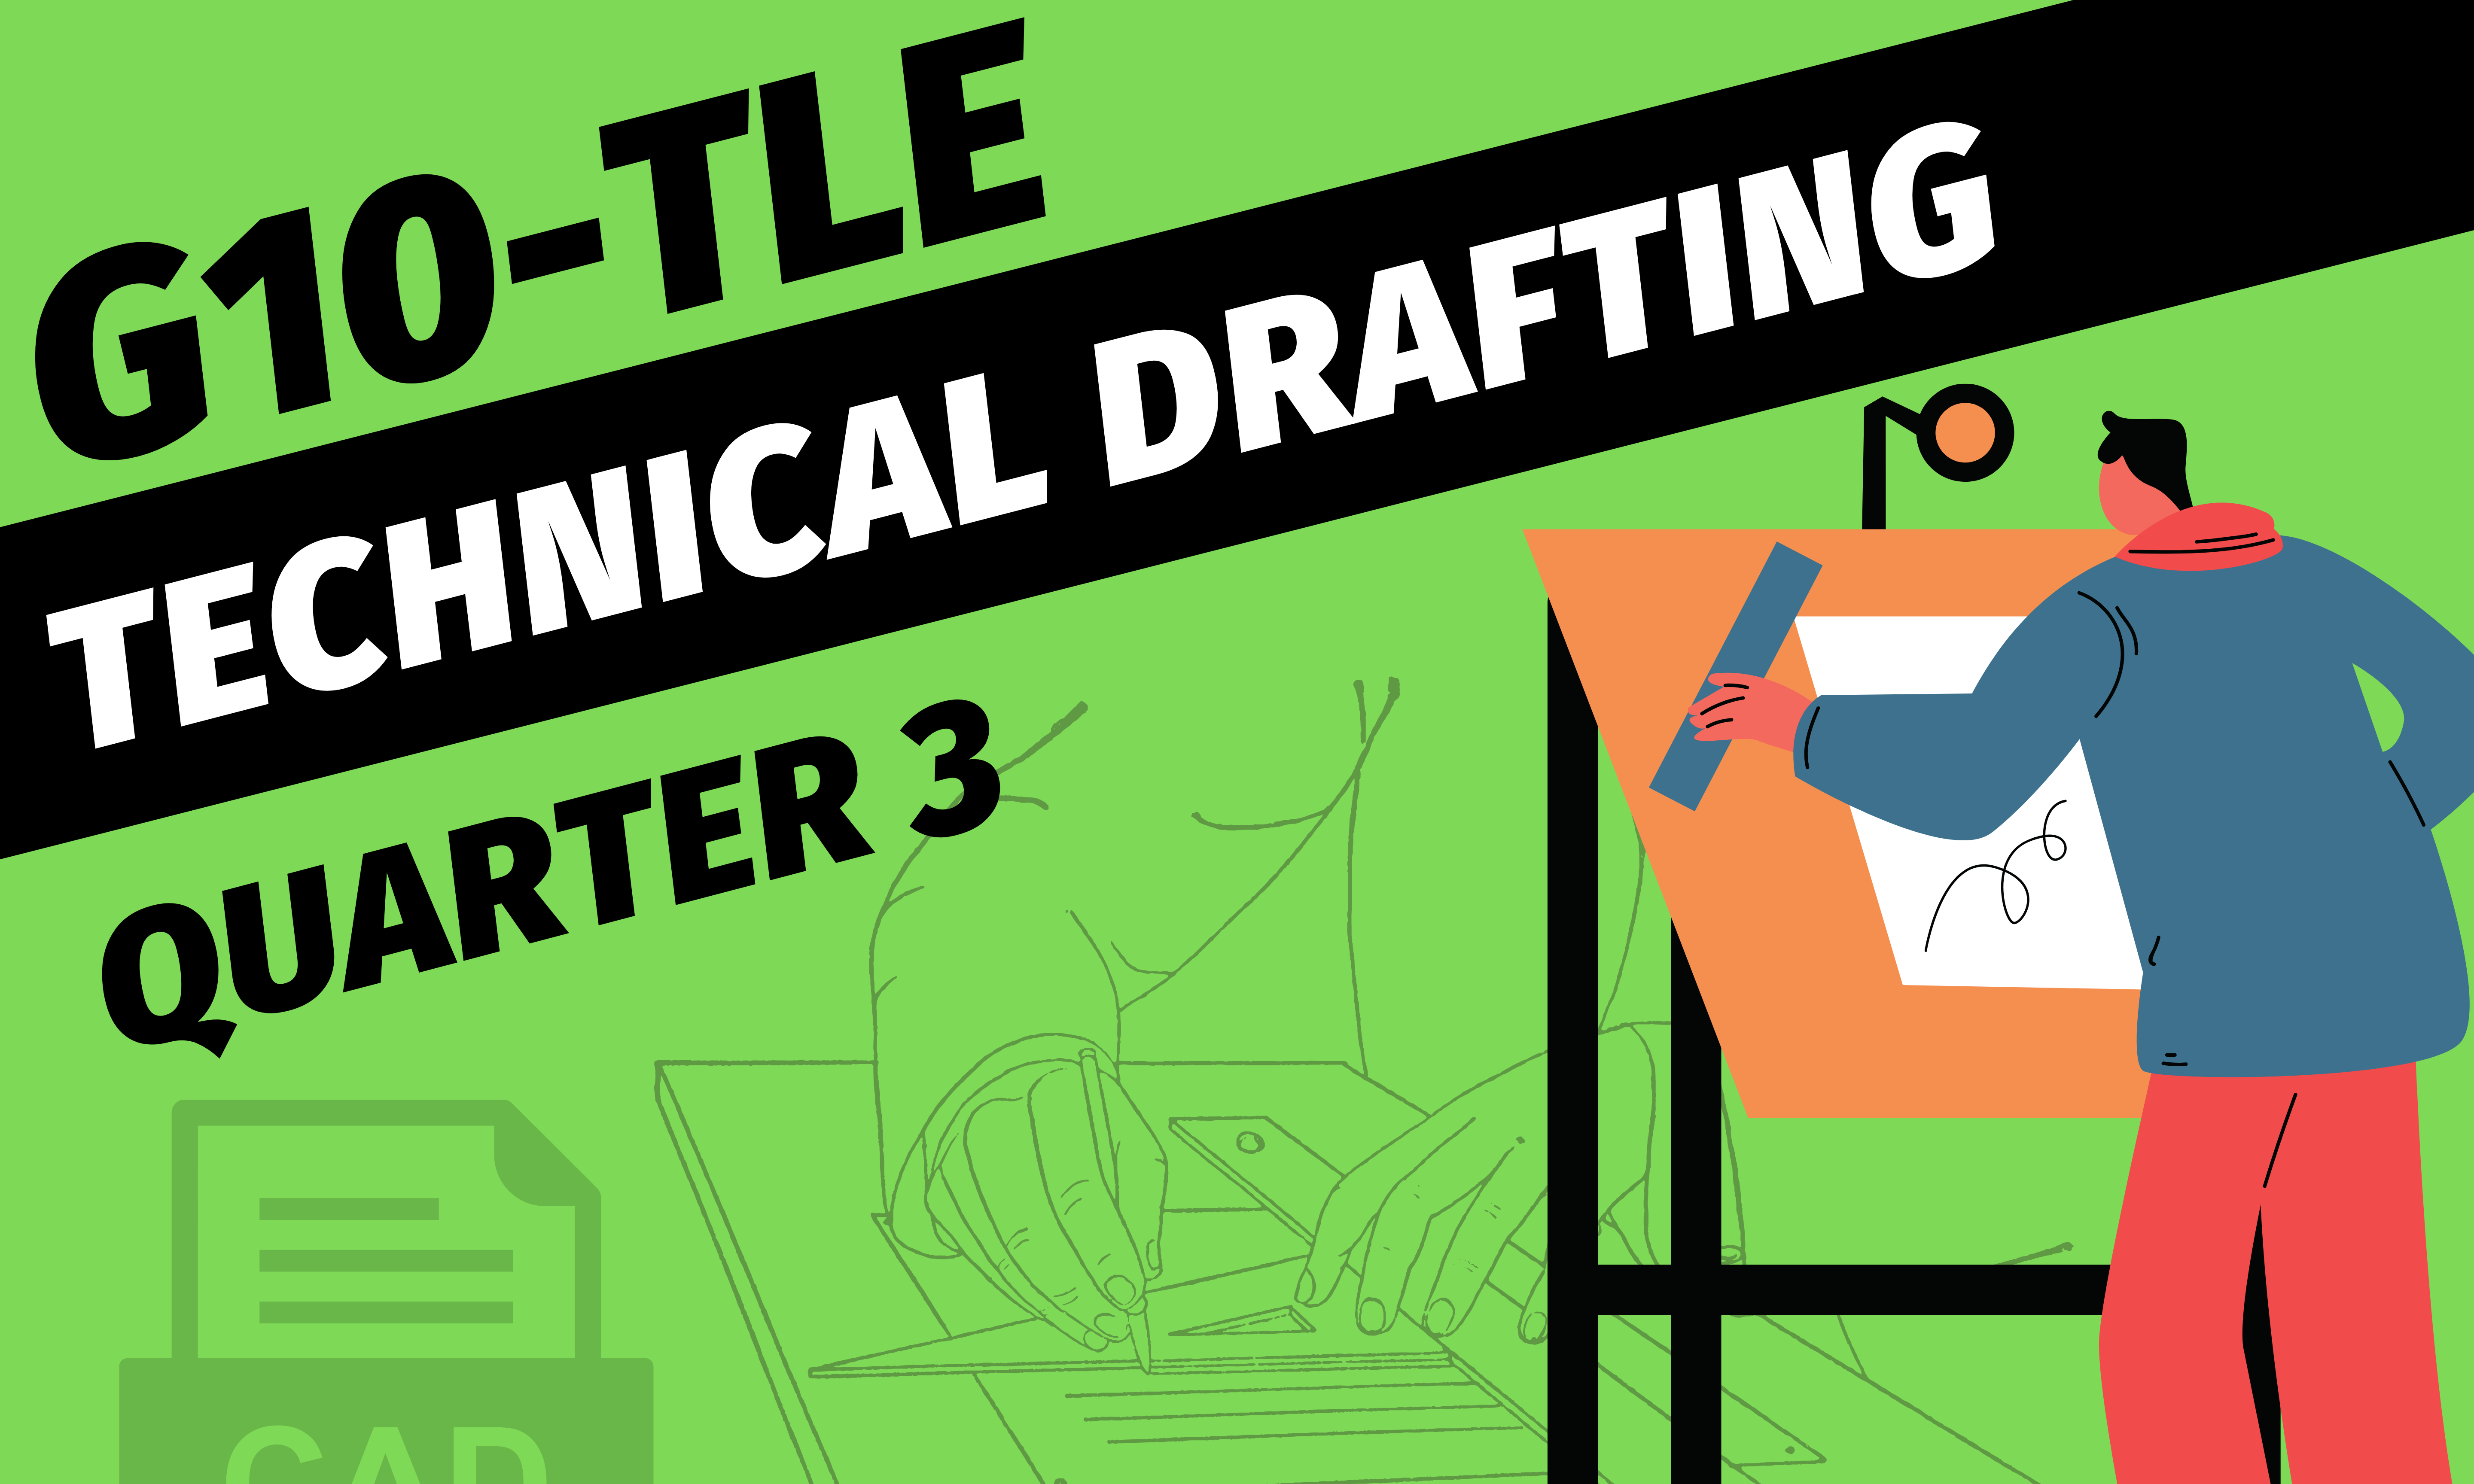 G10-TLE-Technical Drafting-Quarter 3 